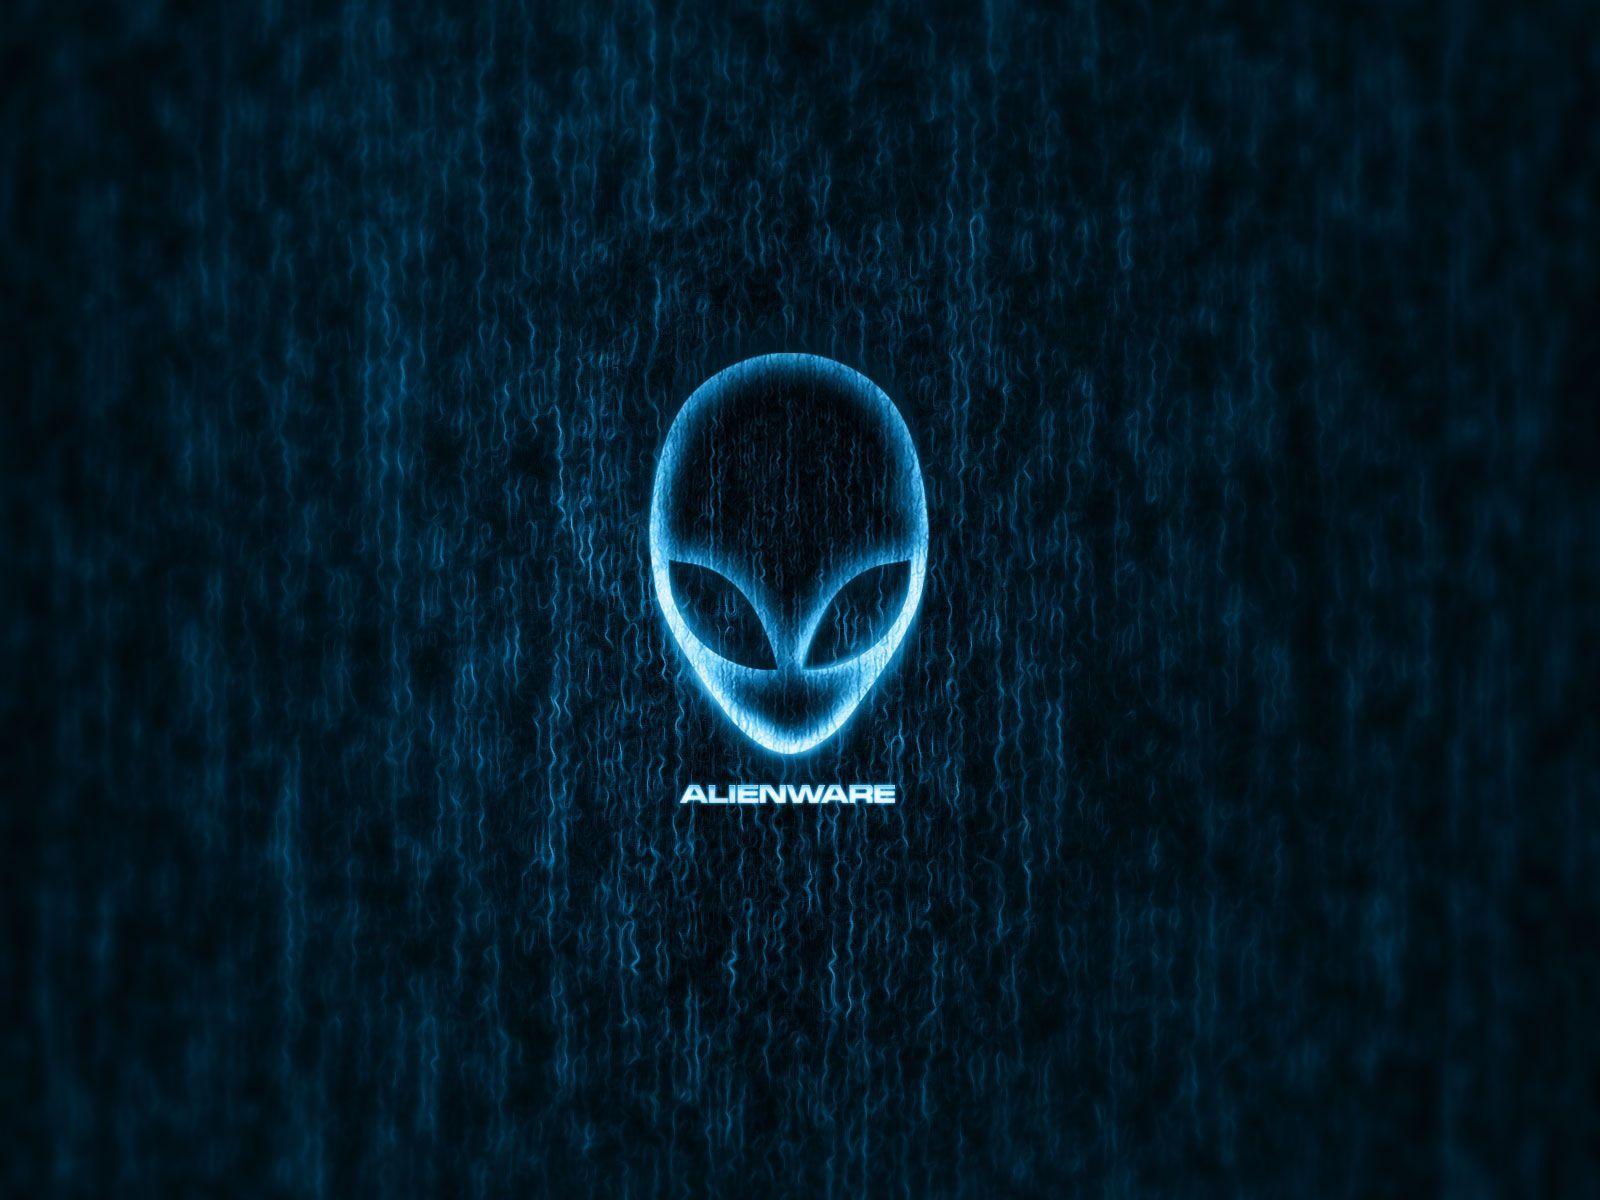 Alienware Space Wallpaper For IPhone Wallpaper. Wallpaper